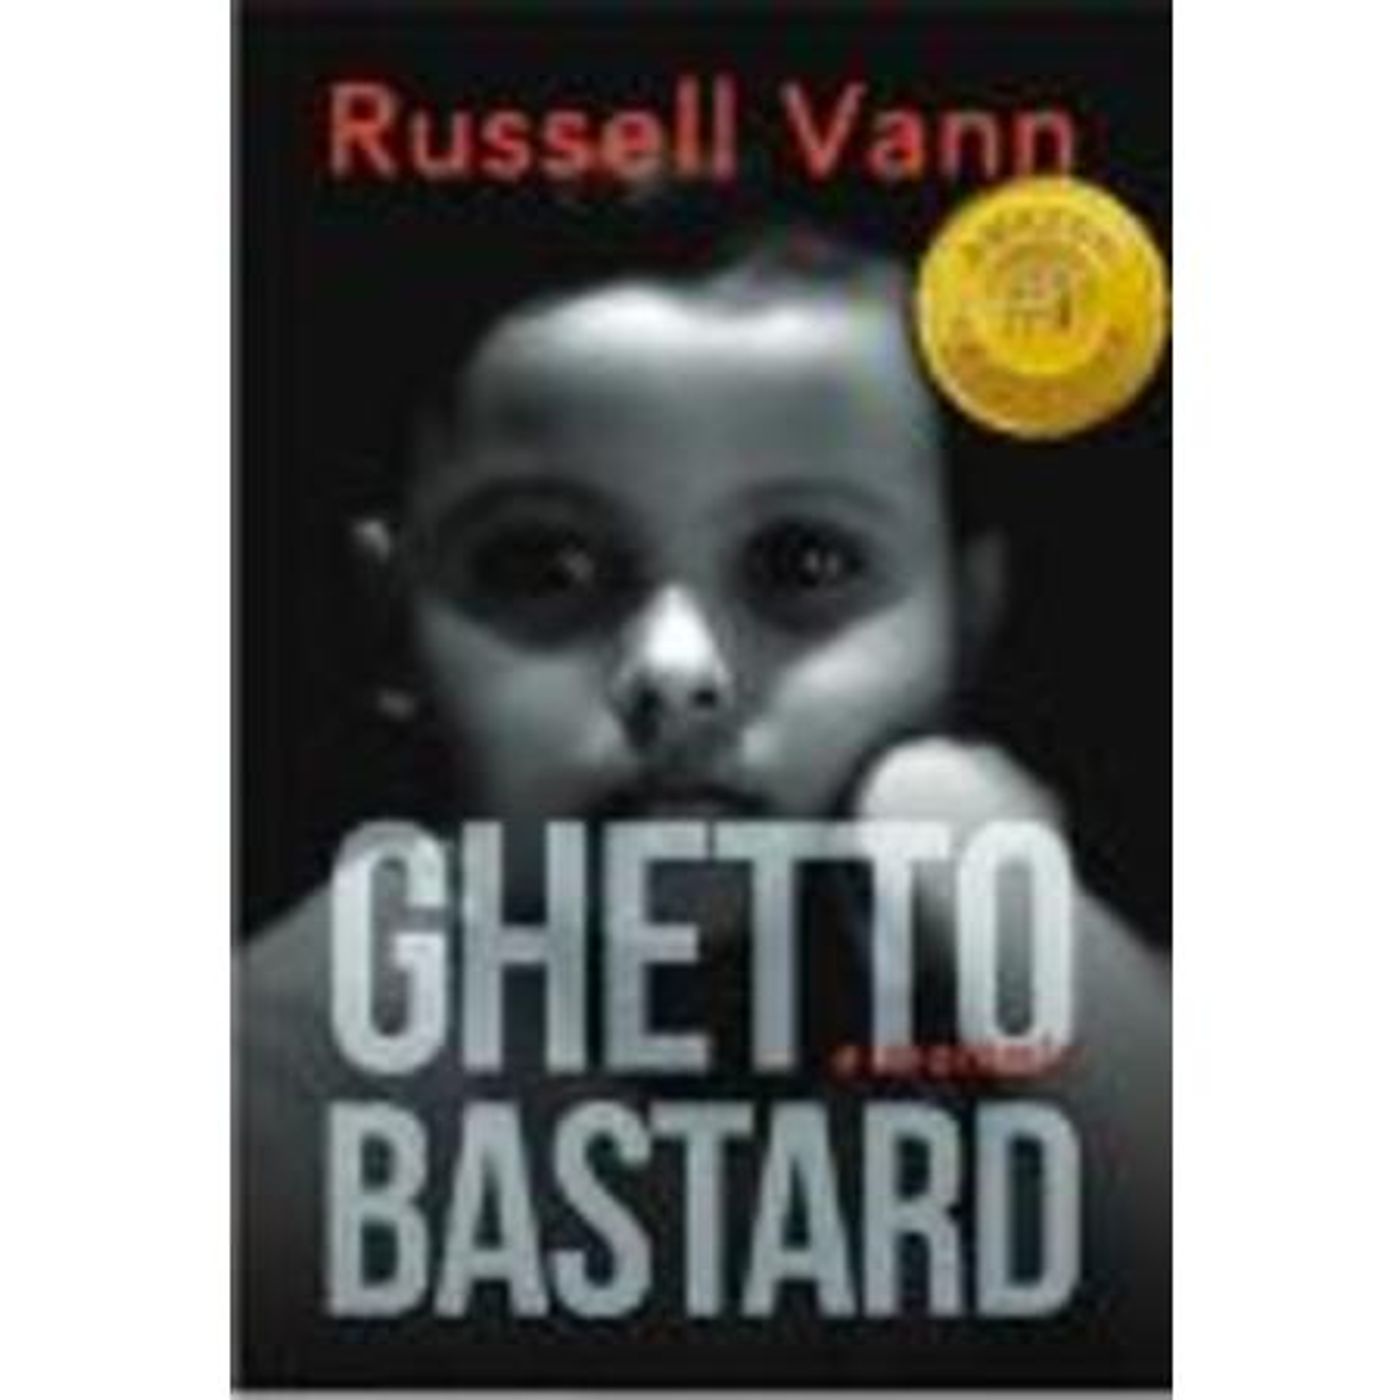 Author of Ghetto Bastard Series Speaks